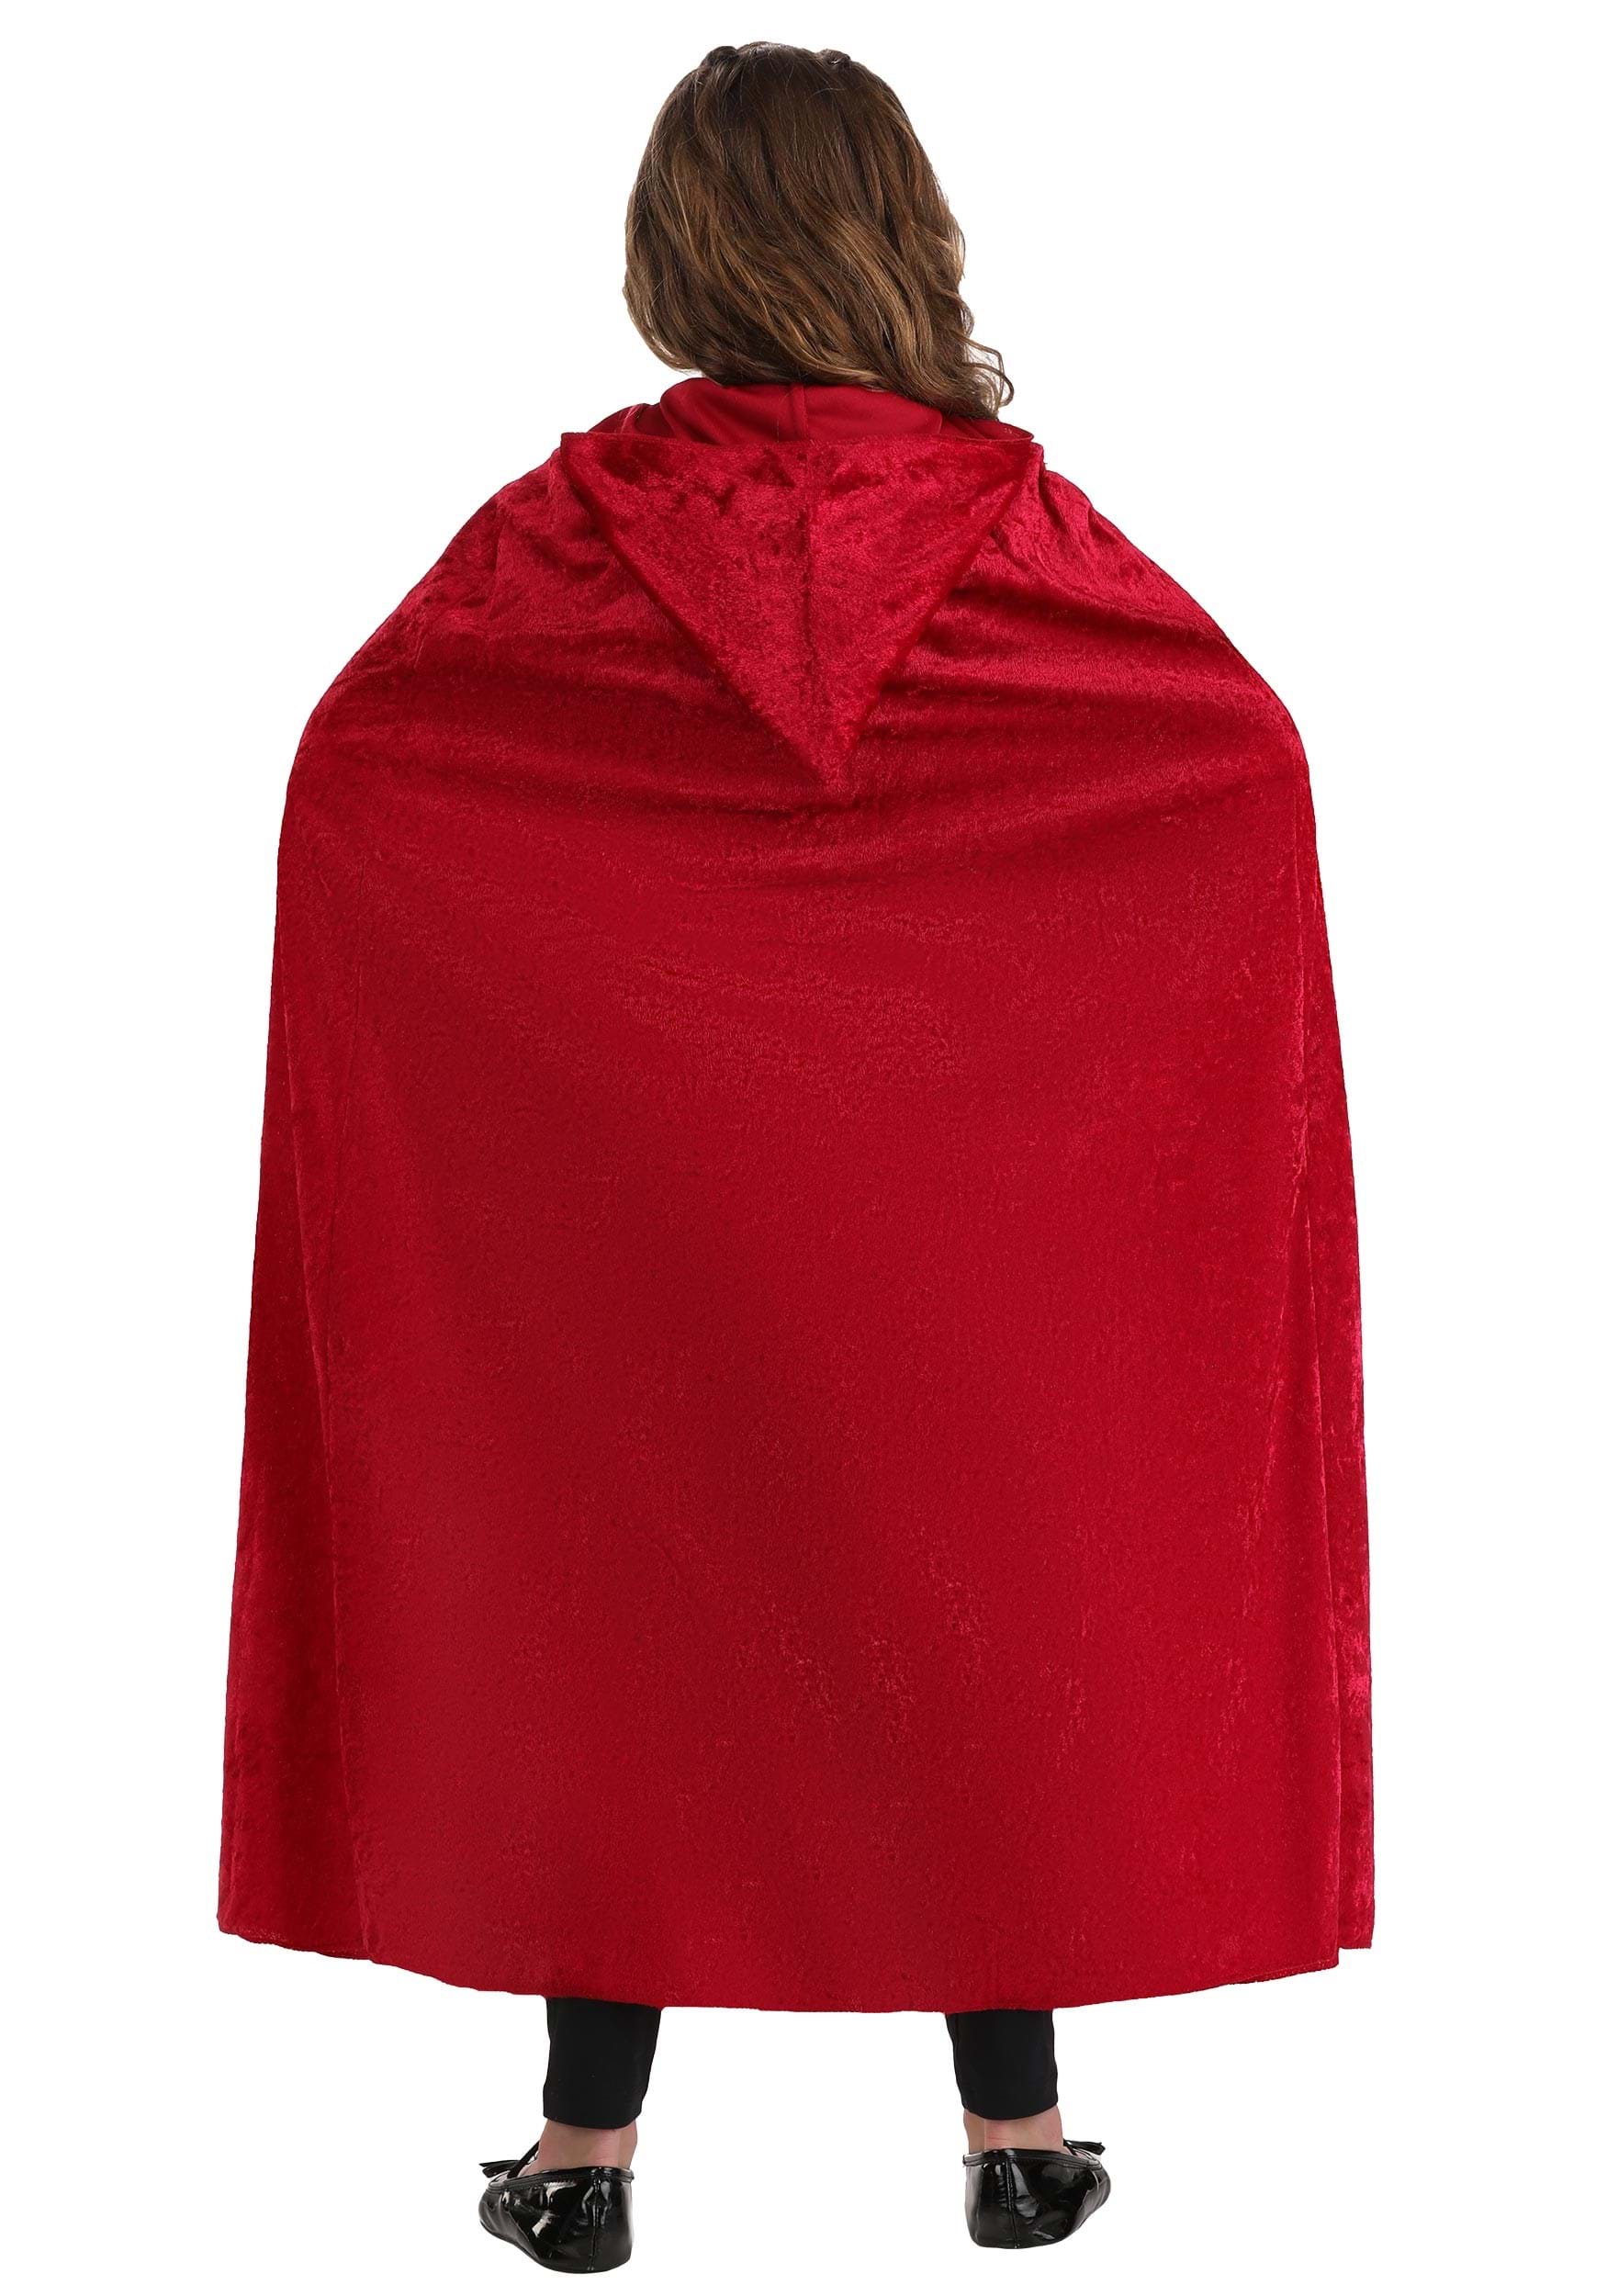 Red Velvet Hooded Kid's Cape , Costume Accessory Capesv